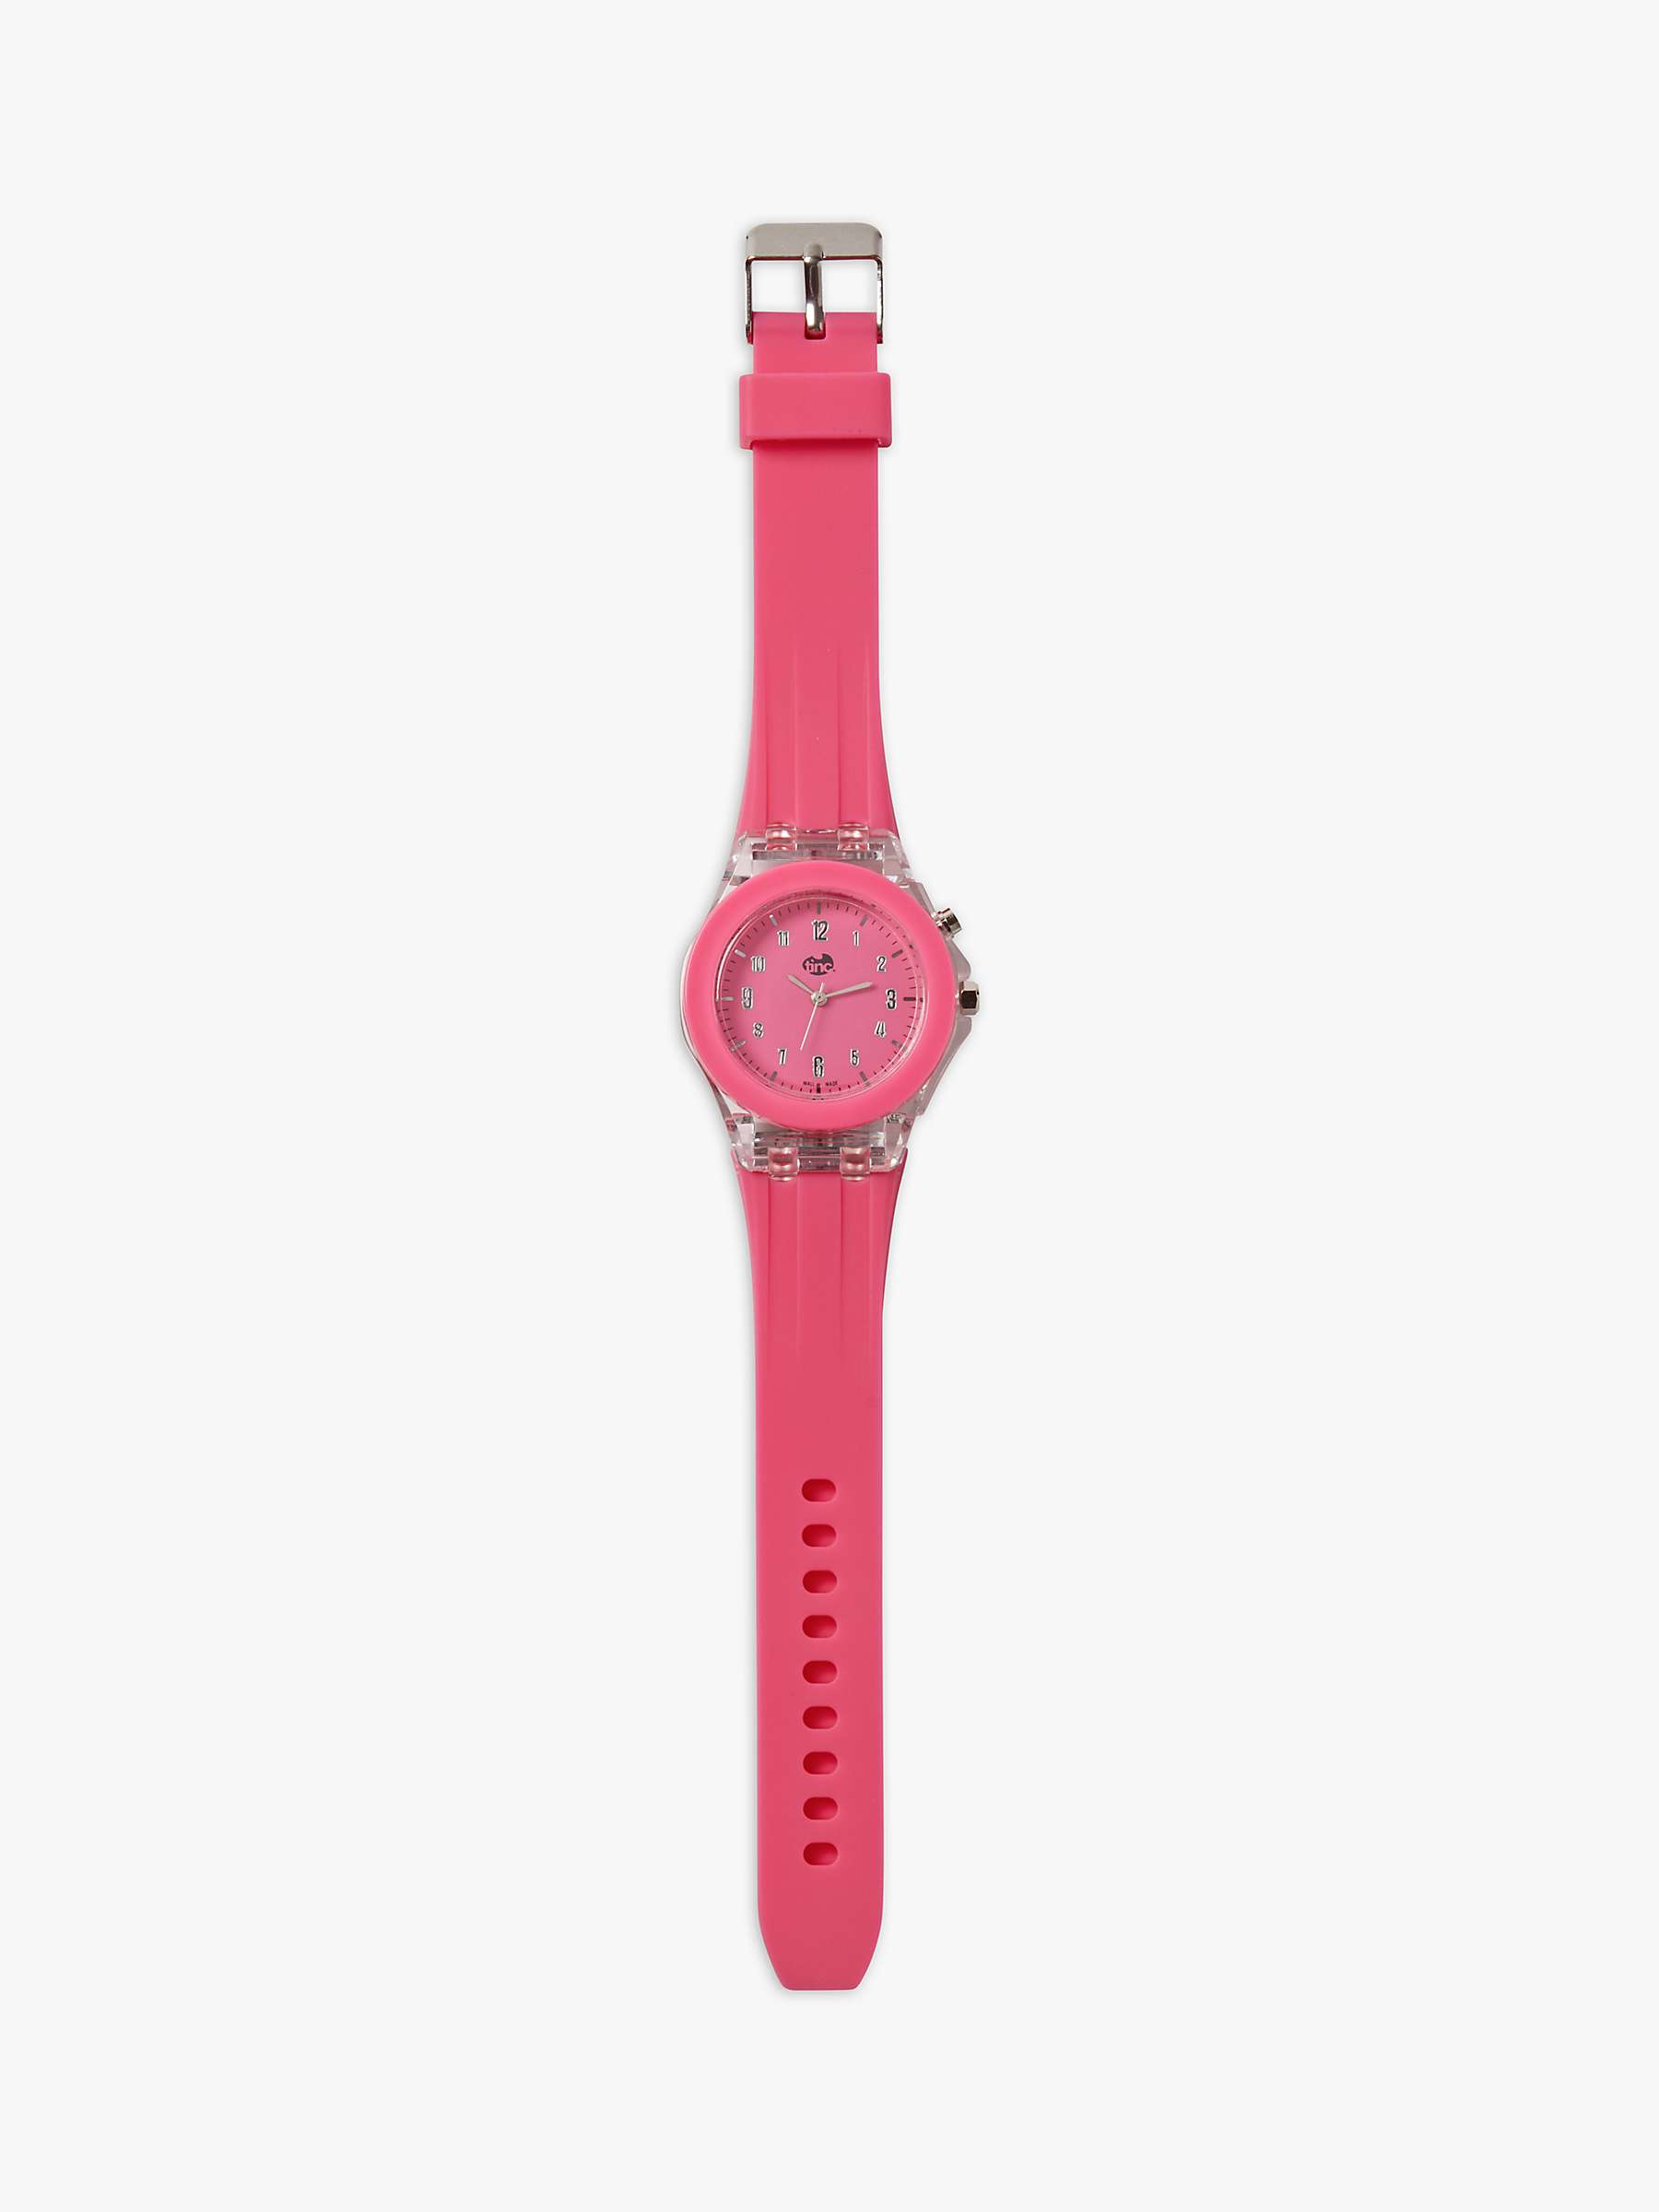 Buy Tinc Boogie Watch, Pink Online at johnlewis.com